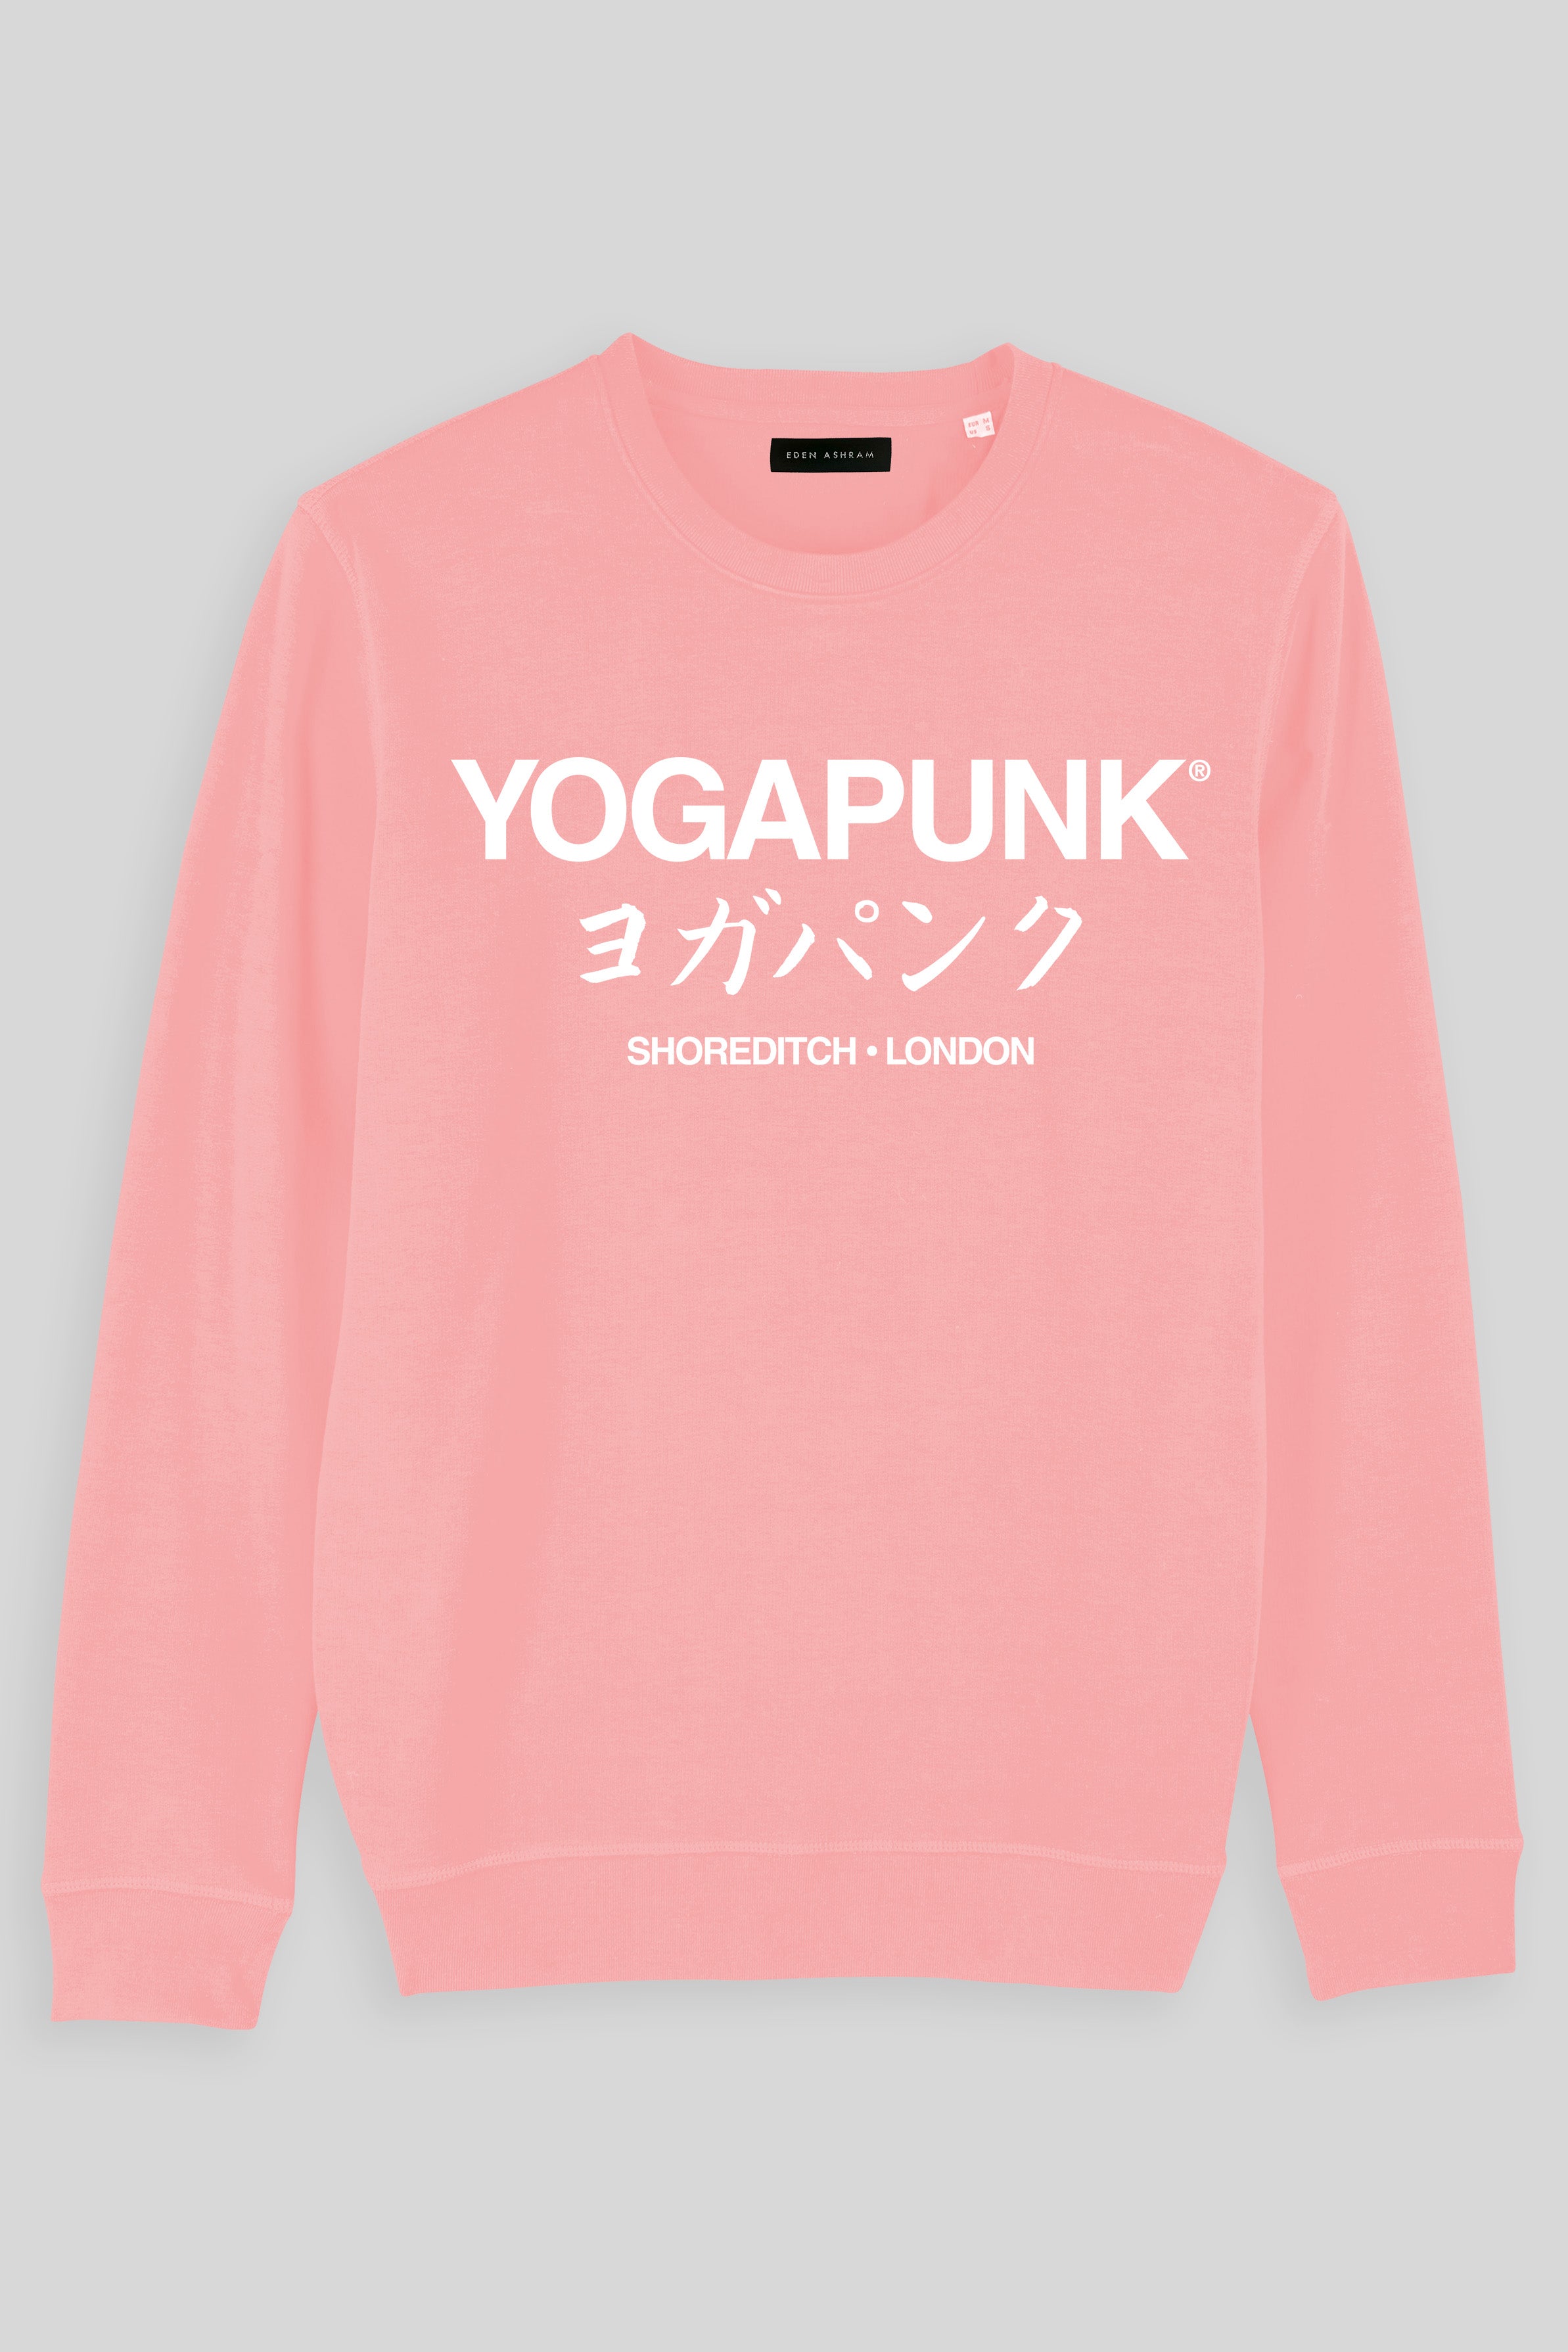 Eden Ashram Yoga Punk® Shoreditch Premium Crew Neck Sweatshirt Canyon Pink